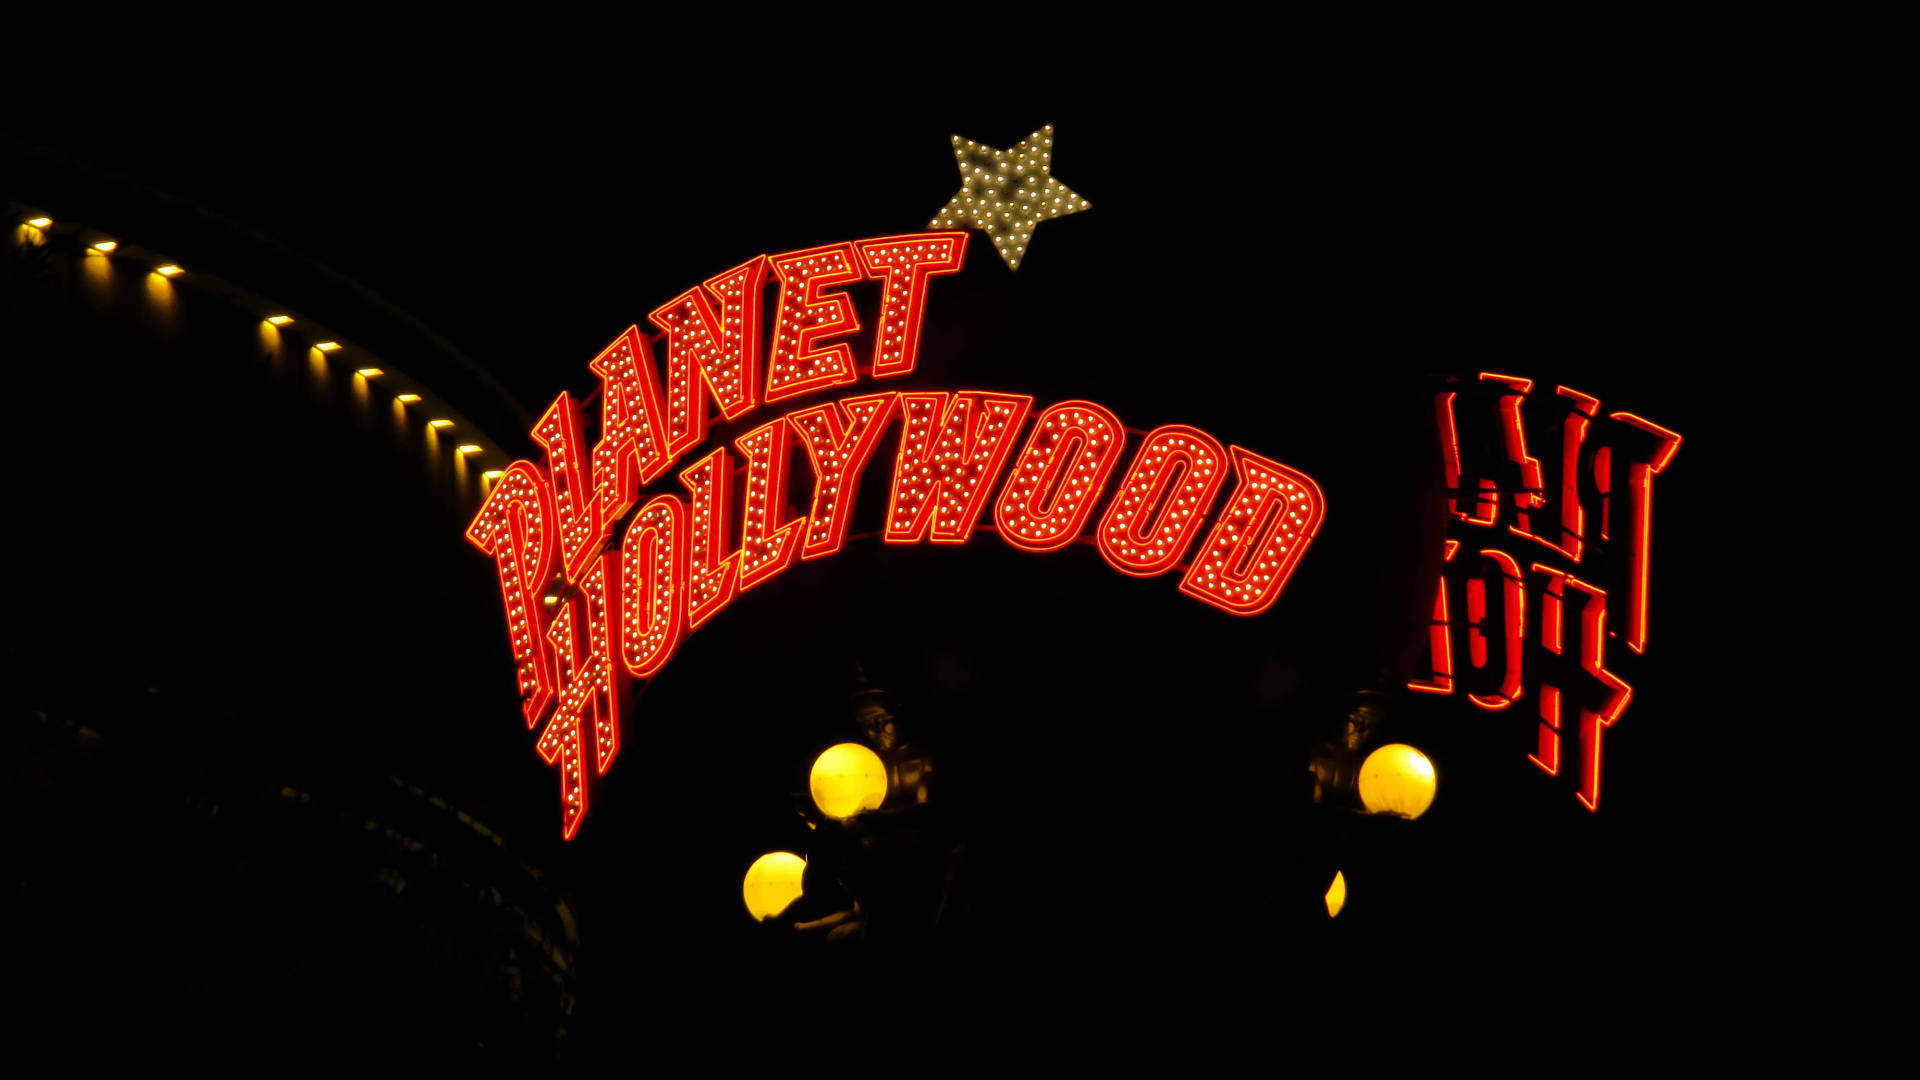 Planet Hollywood Signage